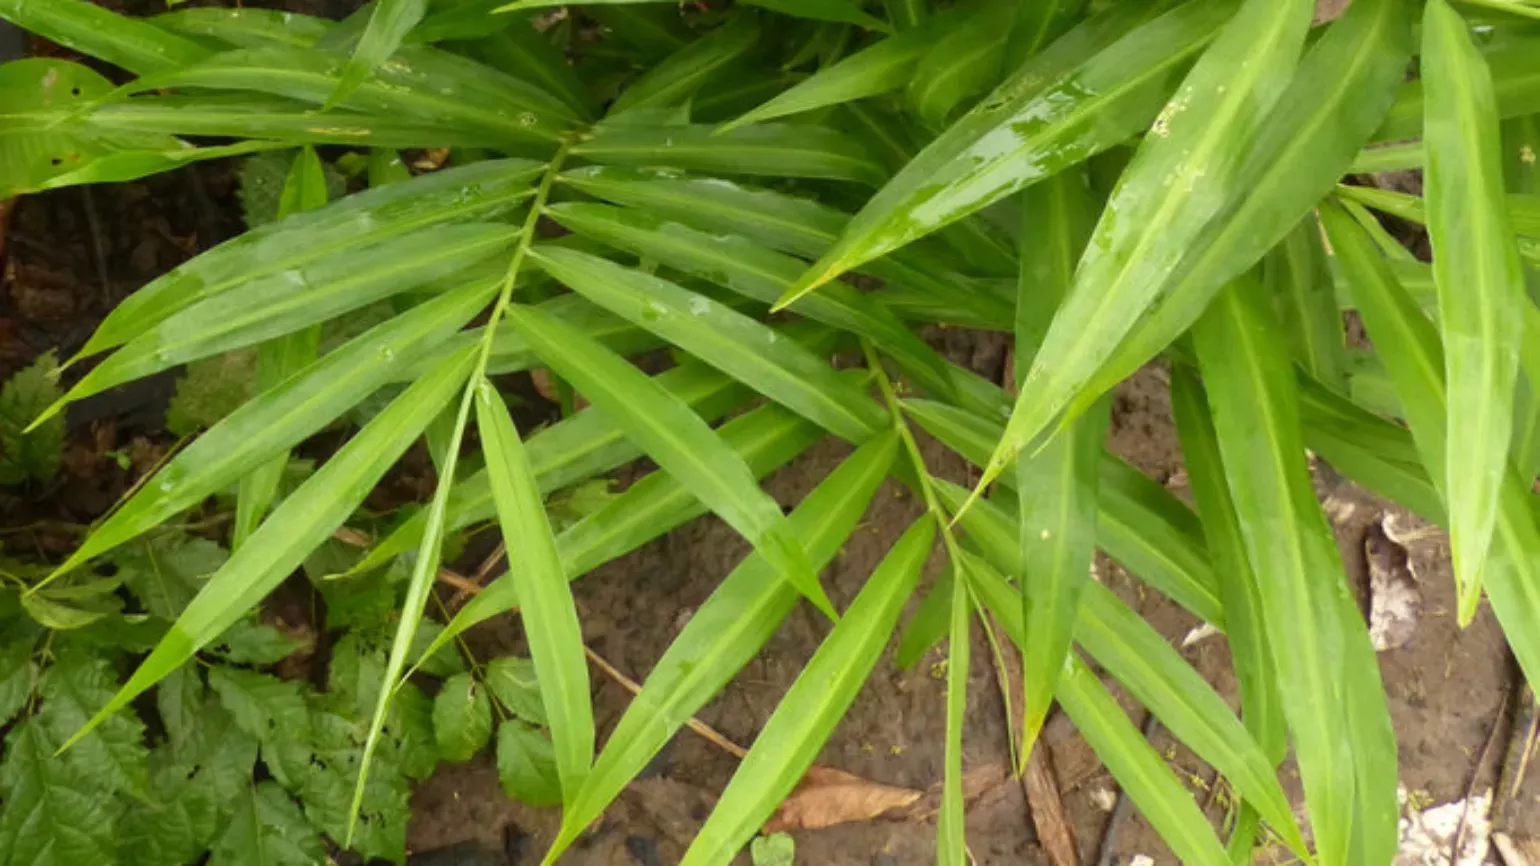 Narrow leaves of ginger plant